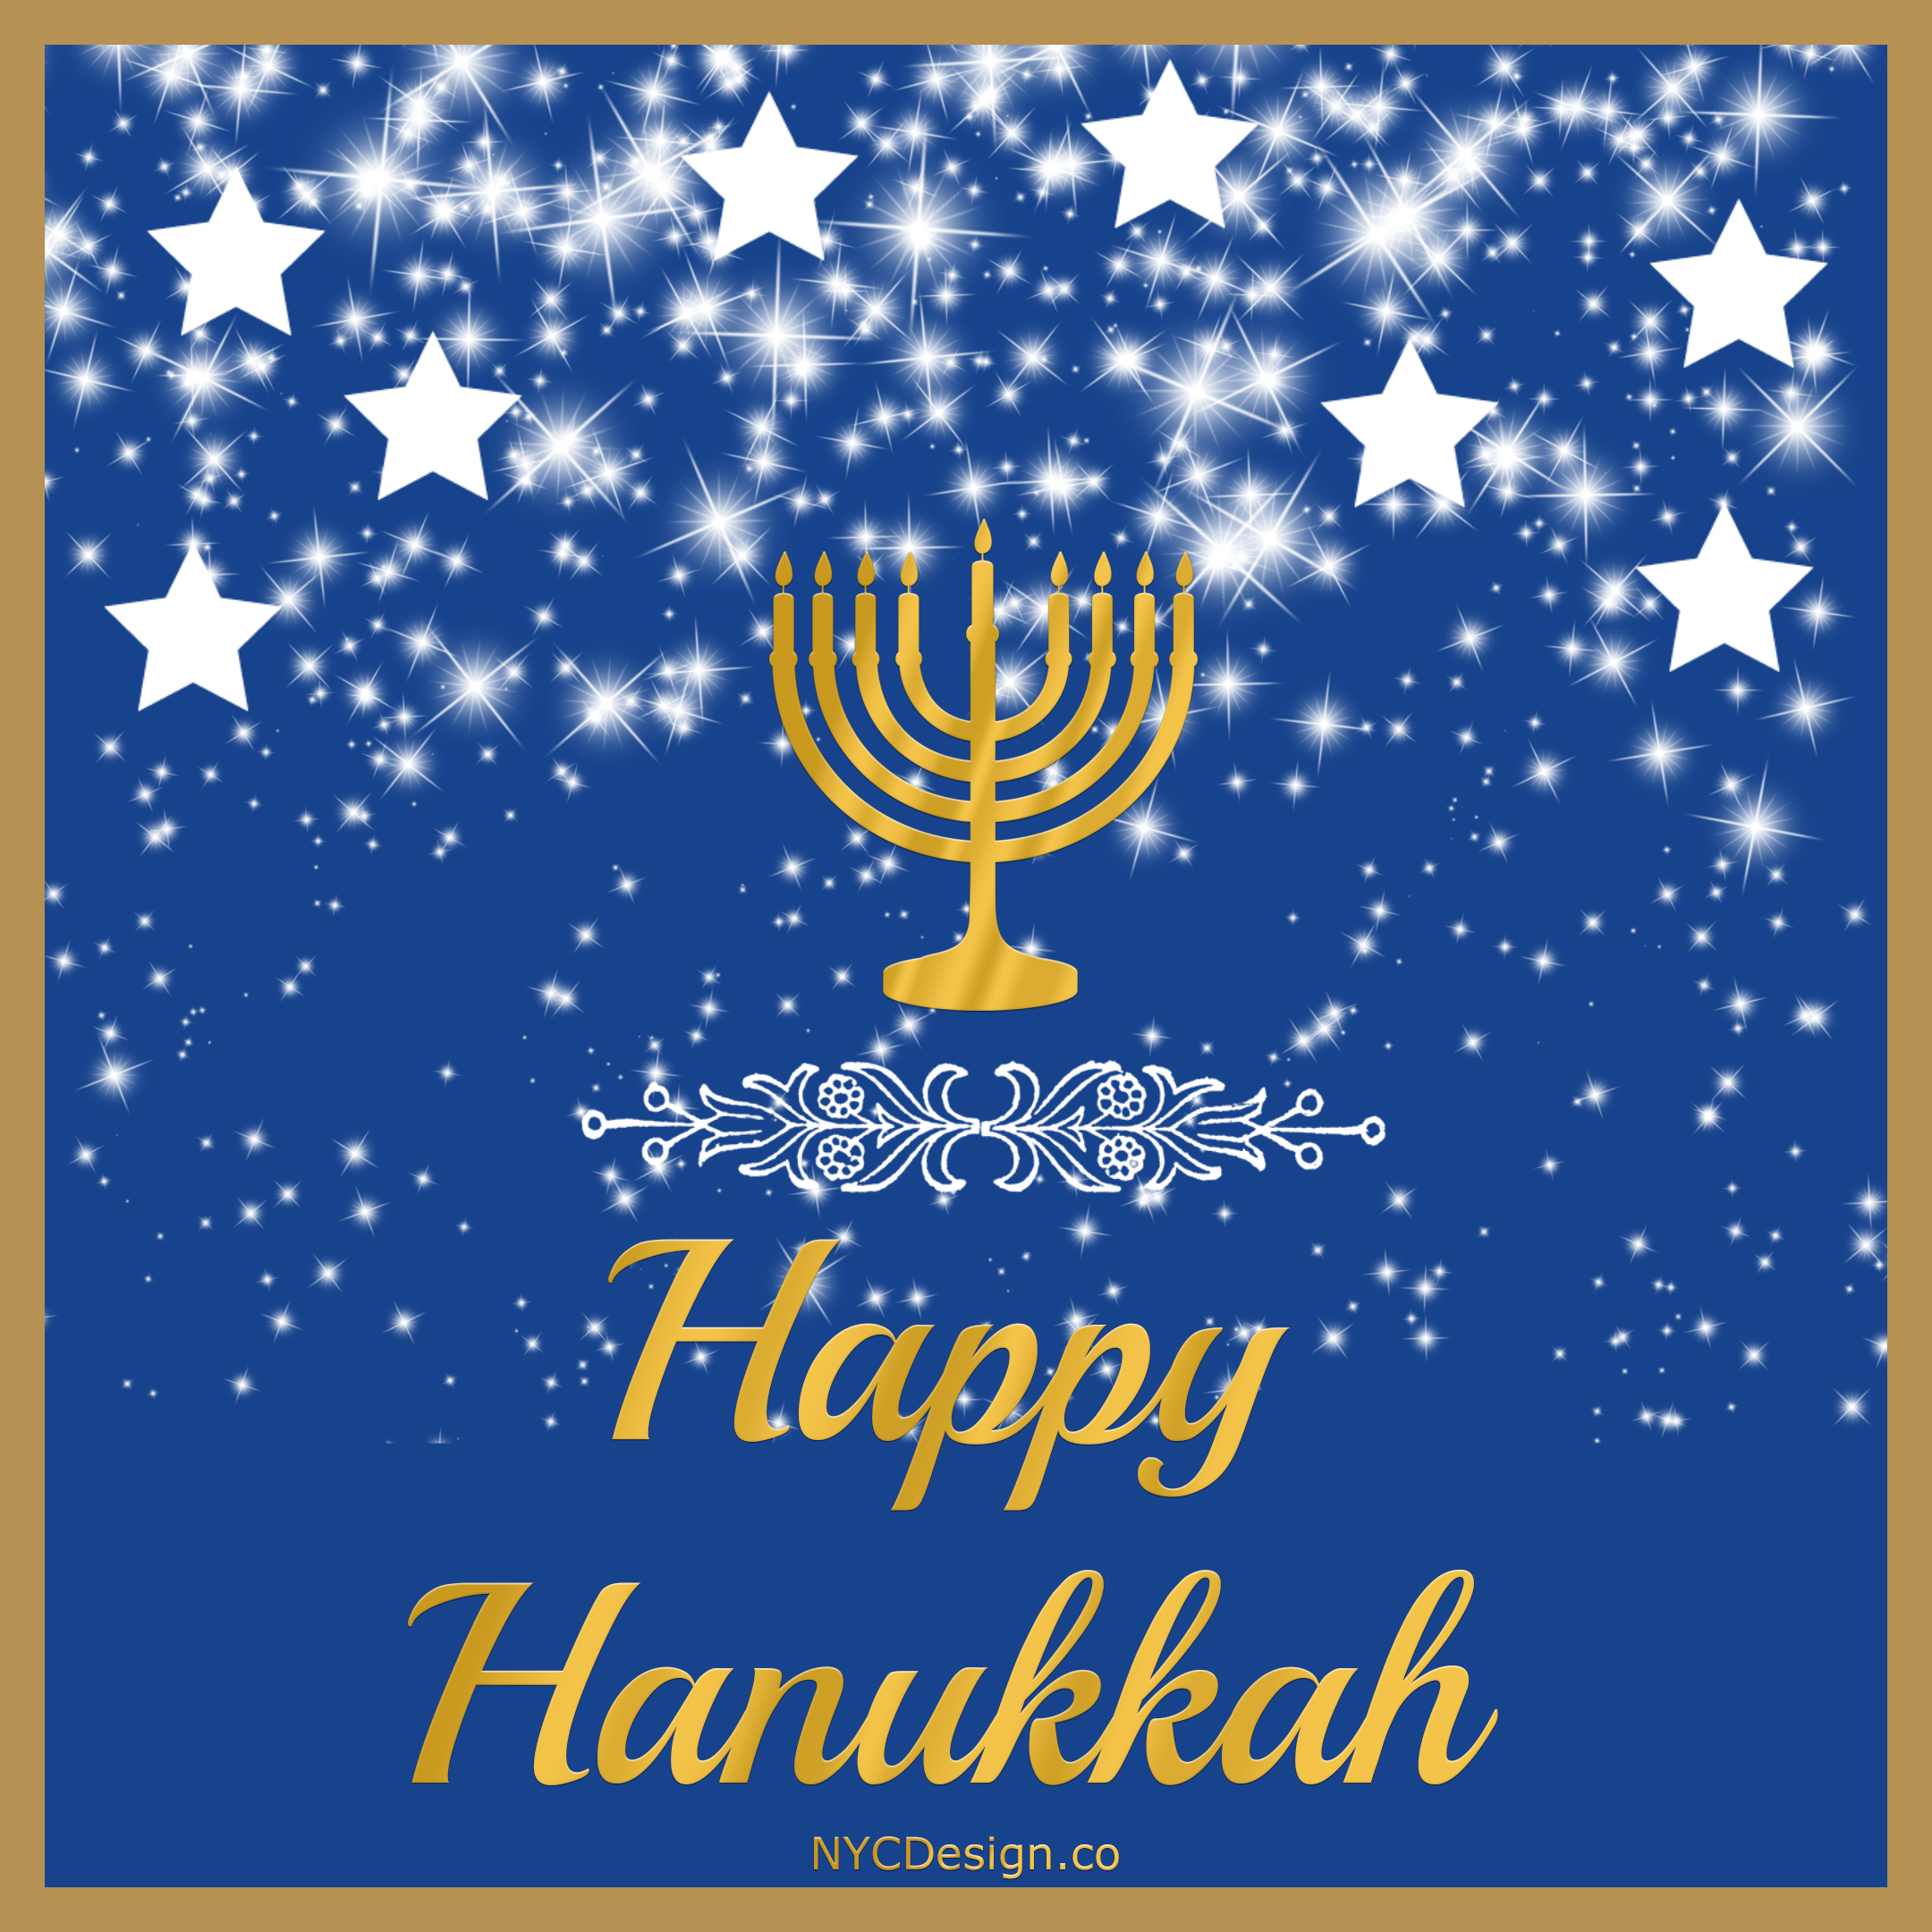 Happy Hanukkah Cards, Free Printable NYCDesign.co Calendars